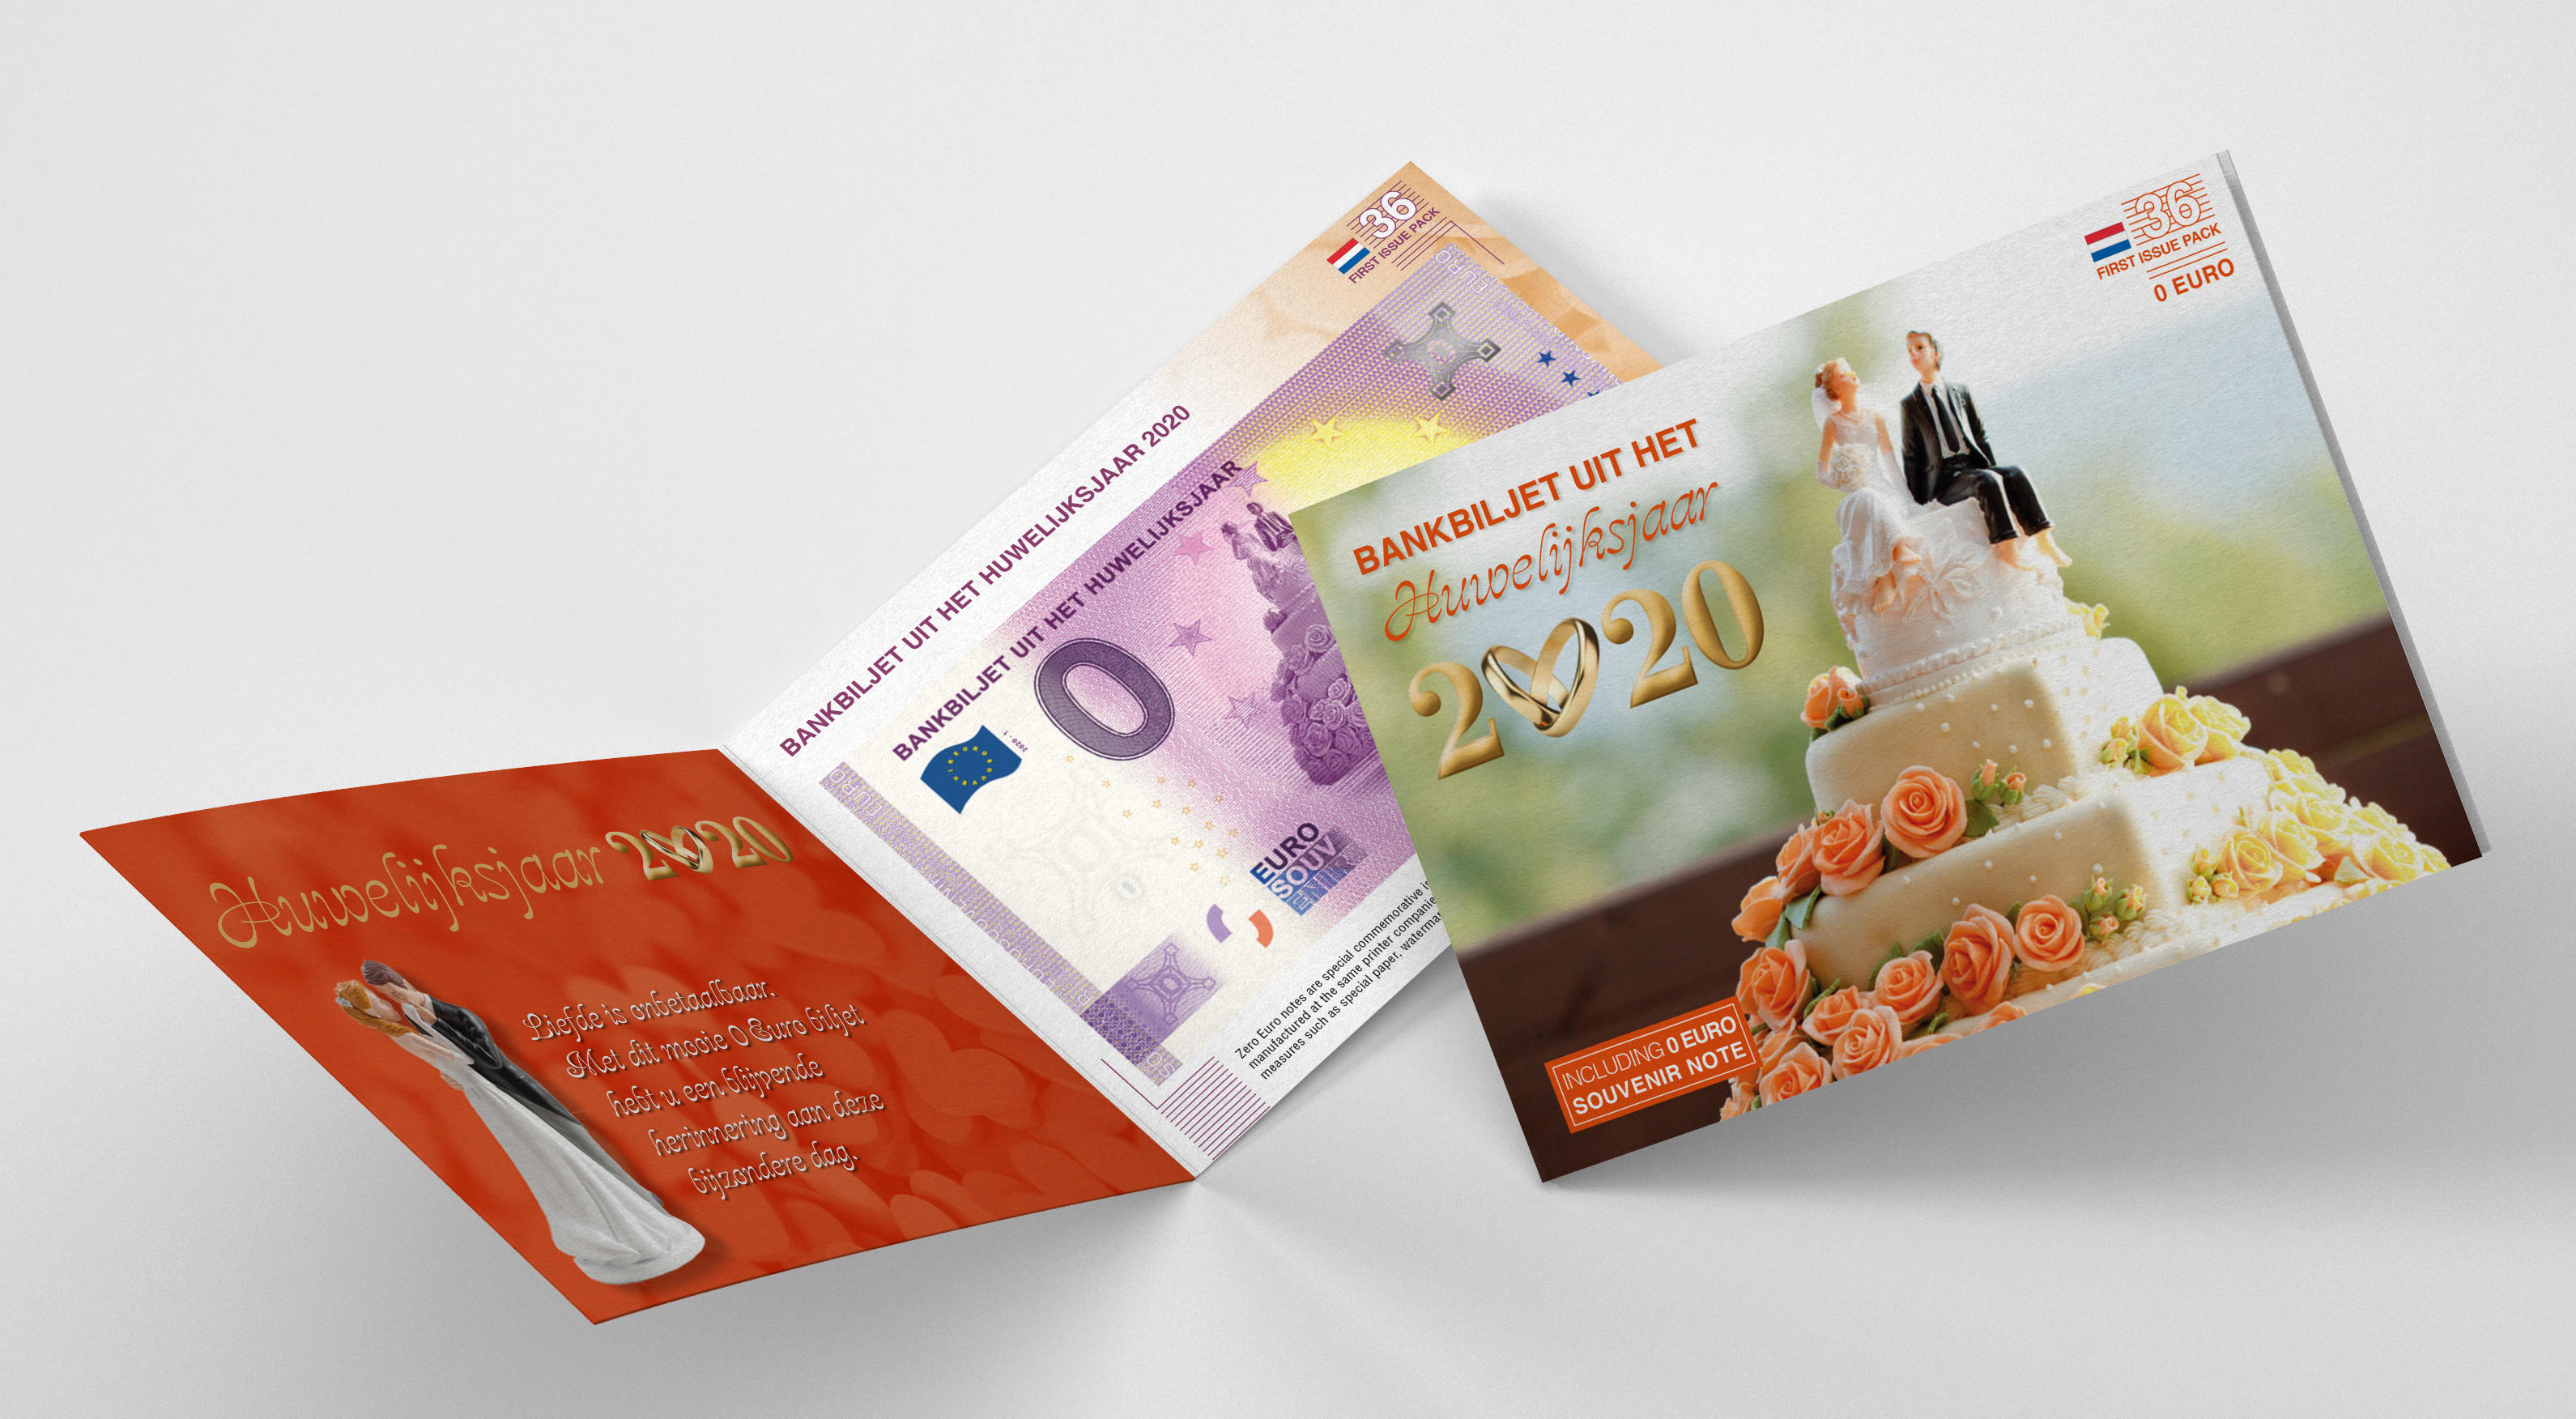 0 Euro biljet Nederland 2020 - Bankbiljet uit het huwelijksjaar LIMITED EDITION FIP#36